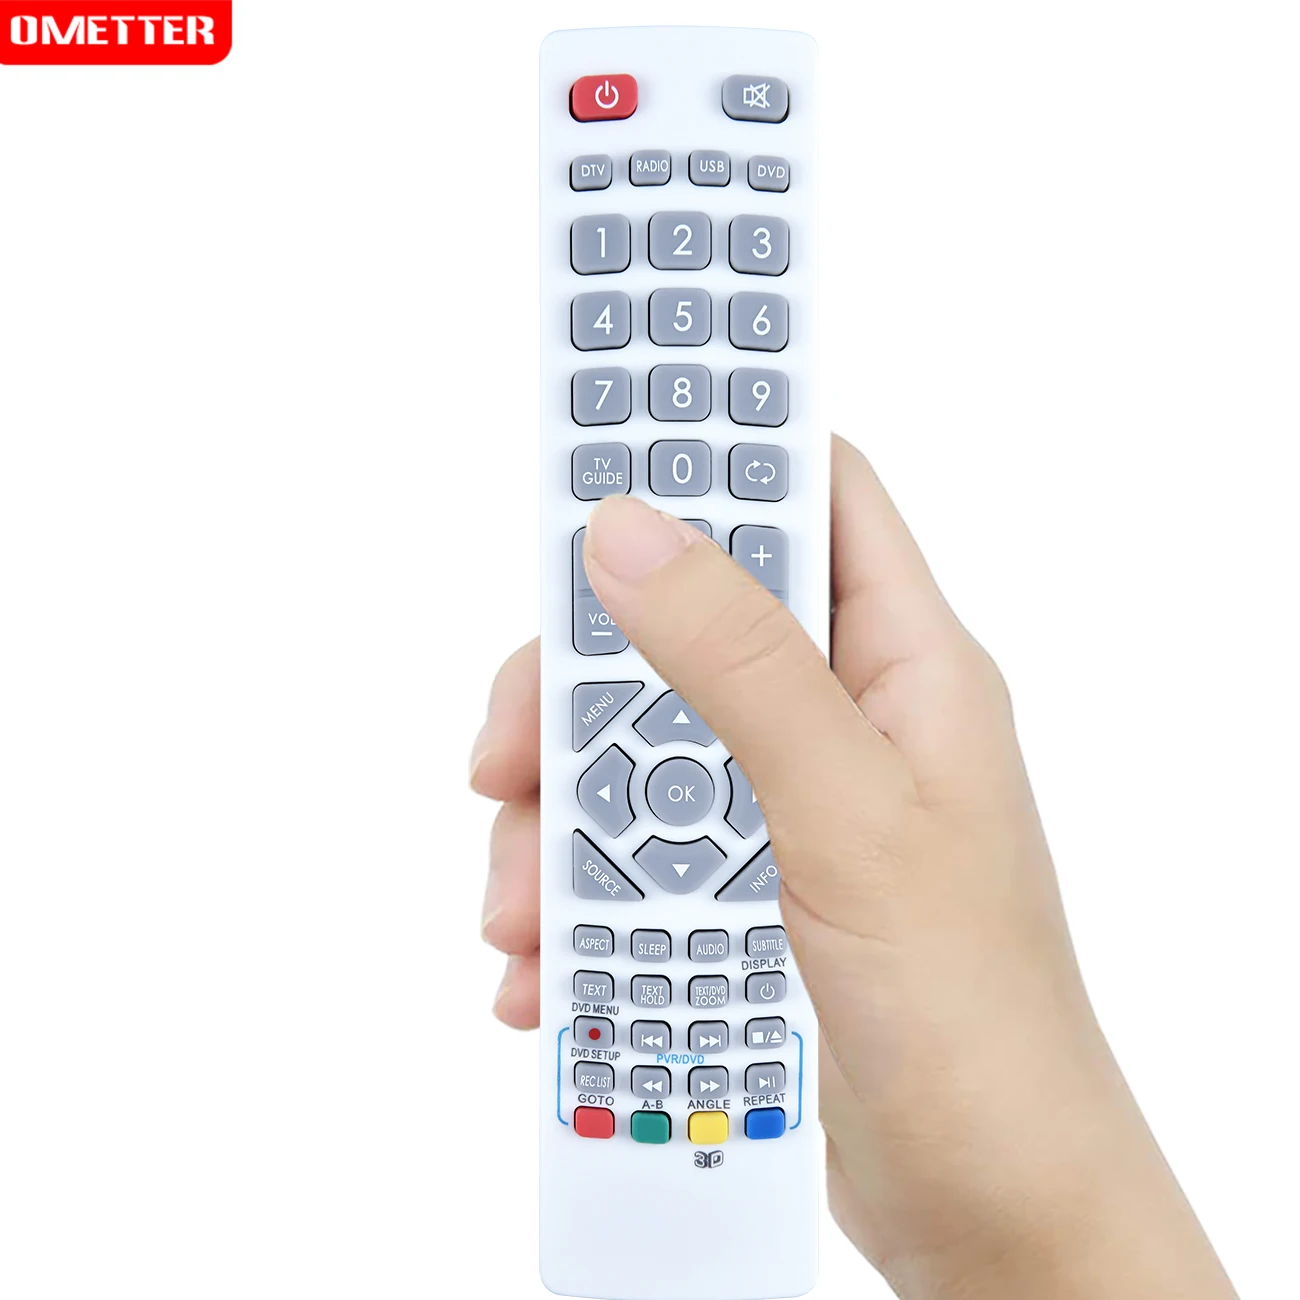 SHWRMC0115 mando a distancia para TV inteligente, dispositivo Original para Sharp  Aquos, LED, IR, con Netflix, , botón 3D, Fernbedienung, nuevo -  AliExpress